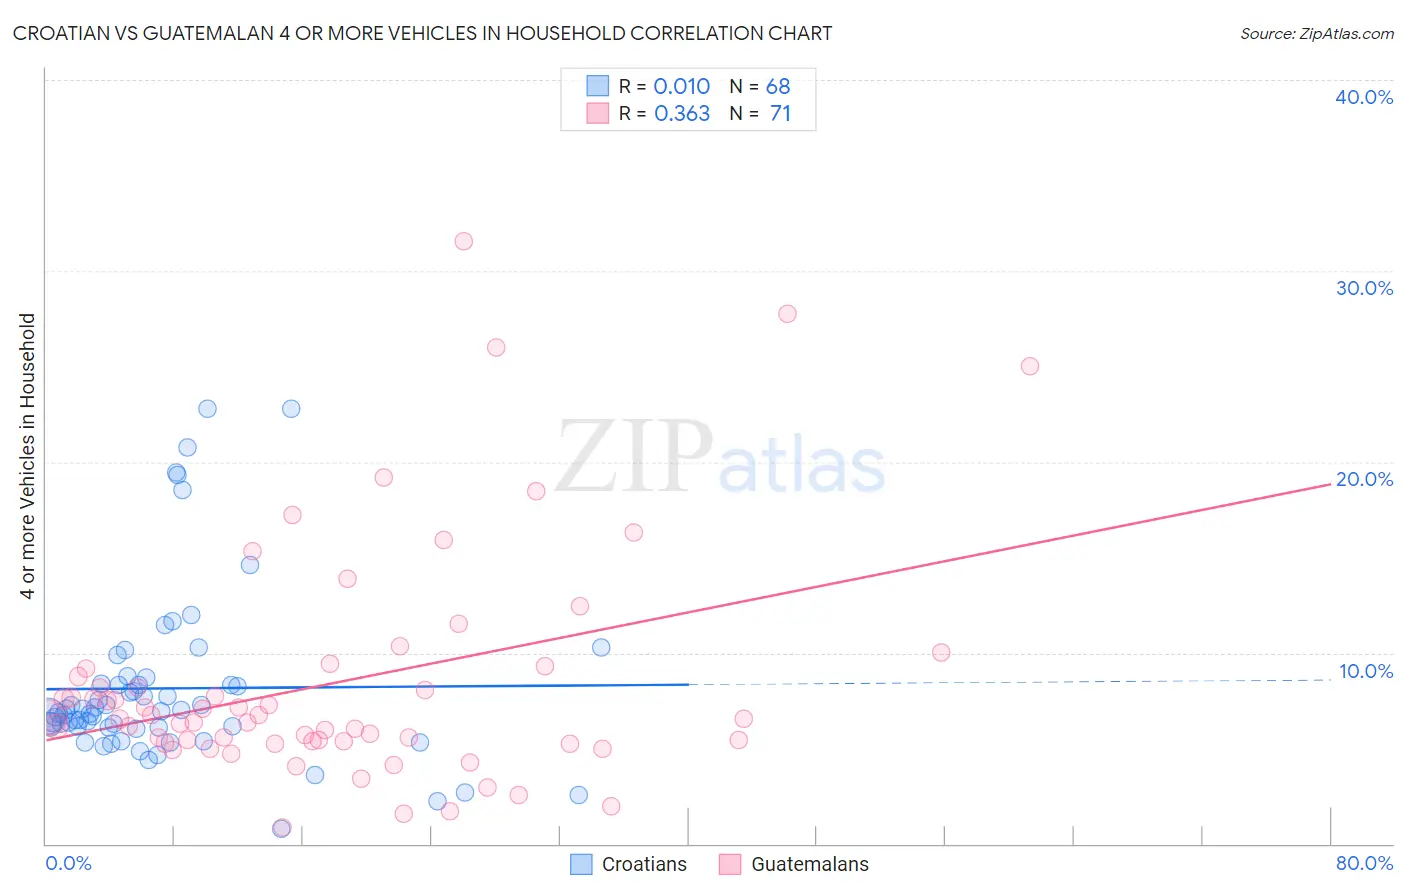 Croatian vs Guatemalan 4 or more Vehicles in Household